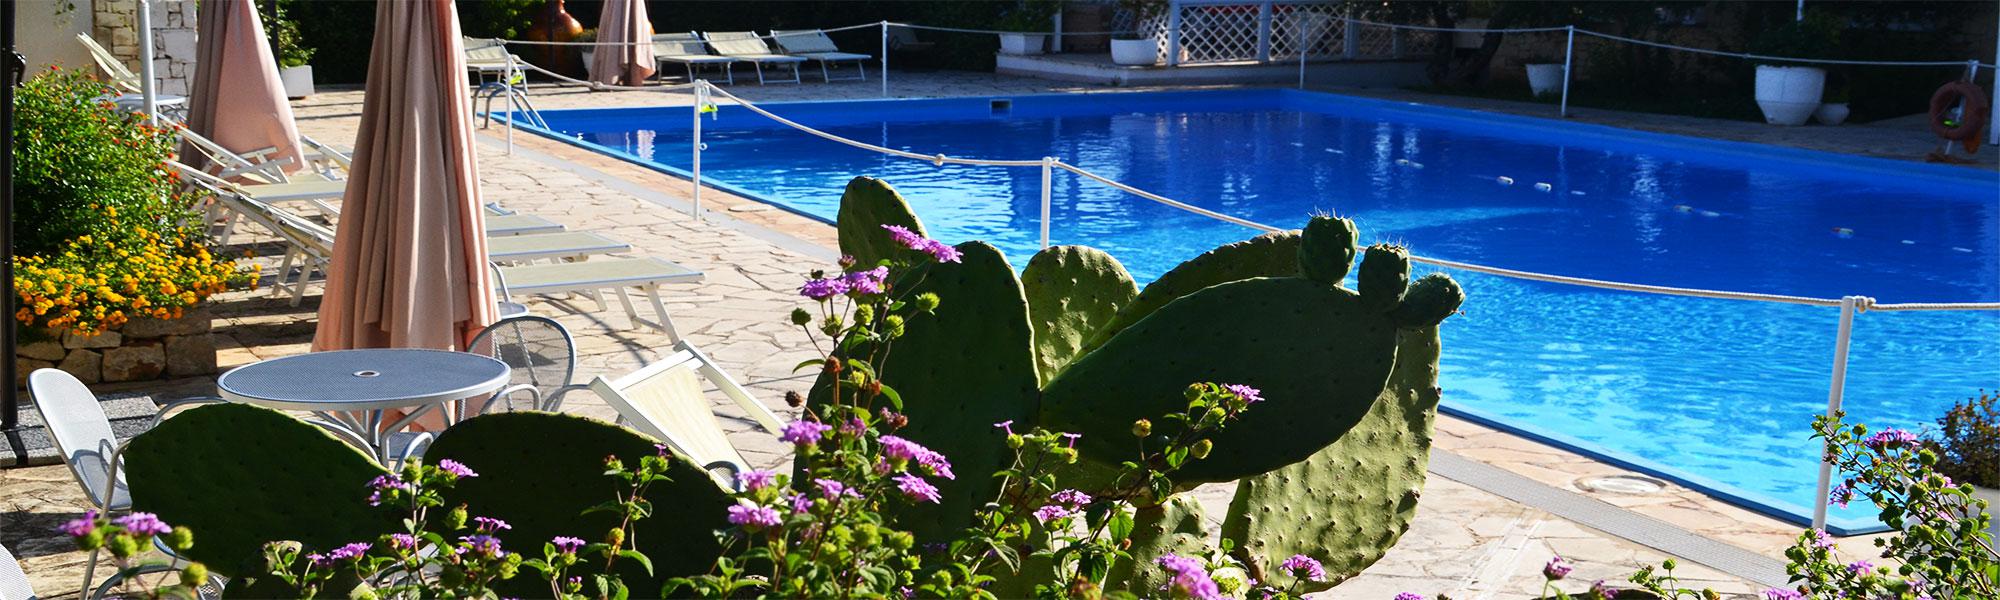 Ferme avec piscine Ostuni - Agritourisme en Italie Pouilles - Agriturismo Salinola 3